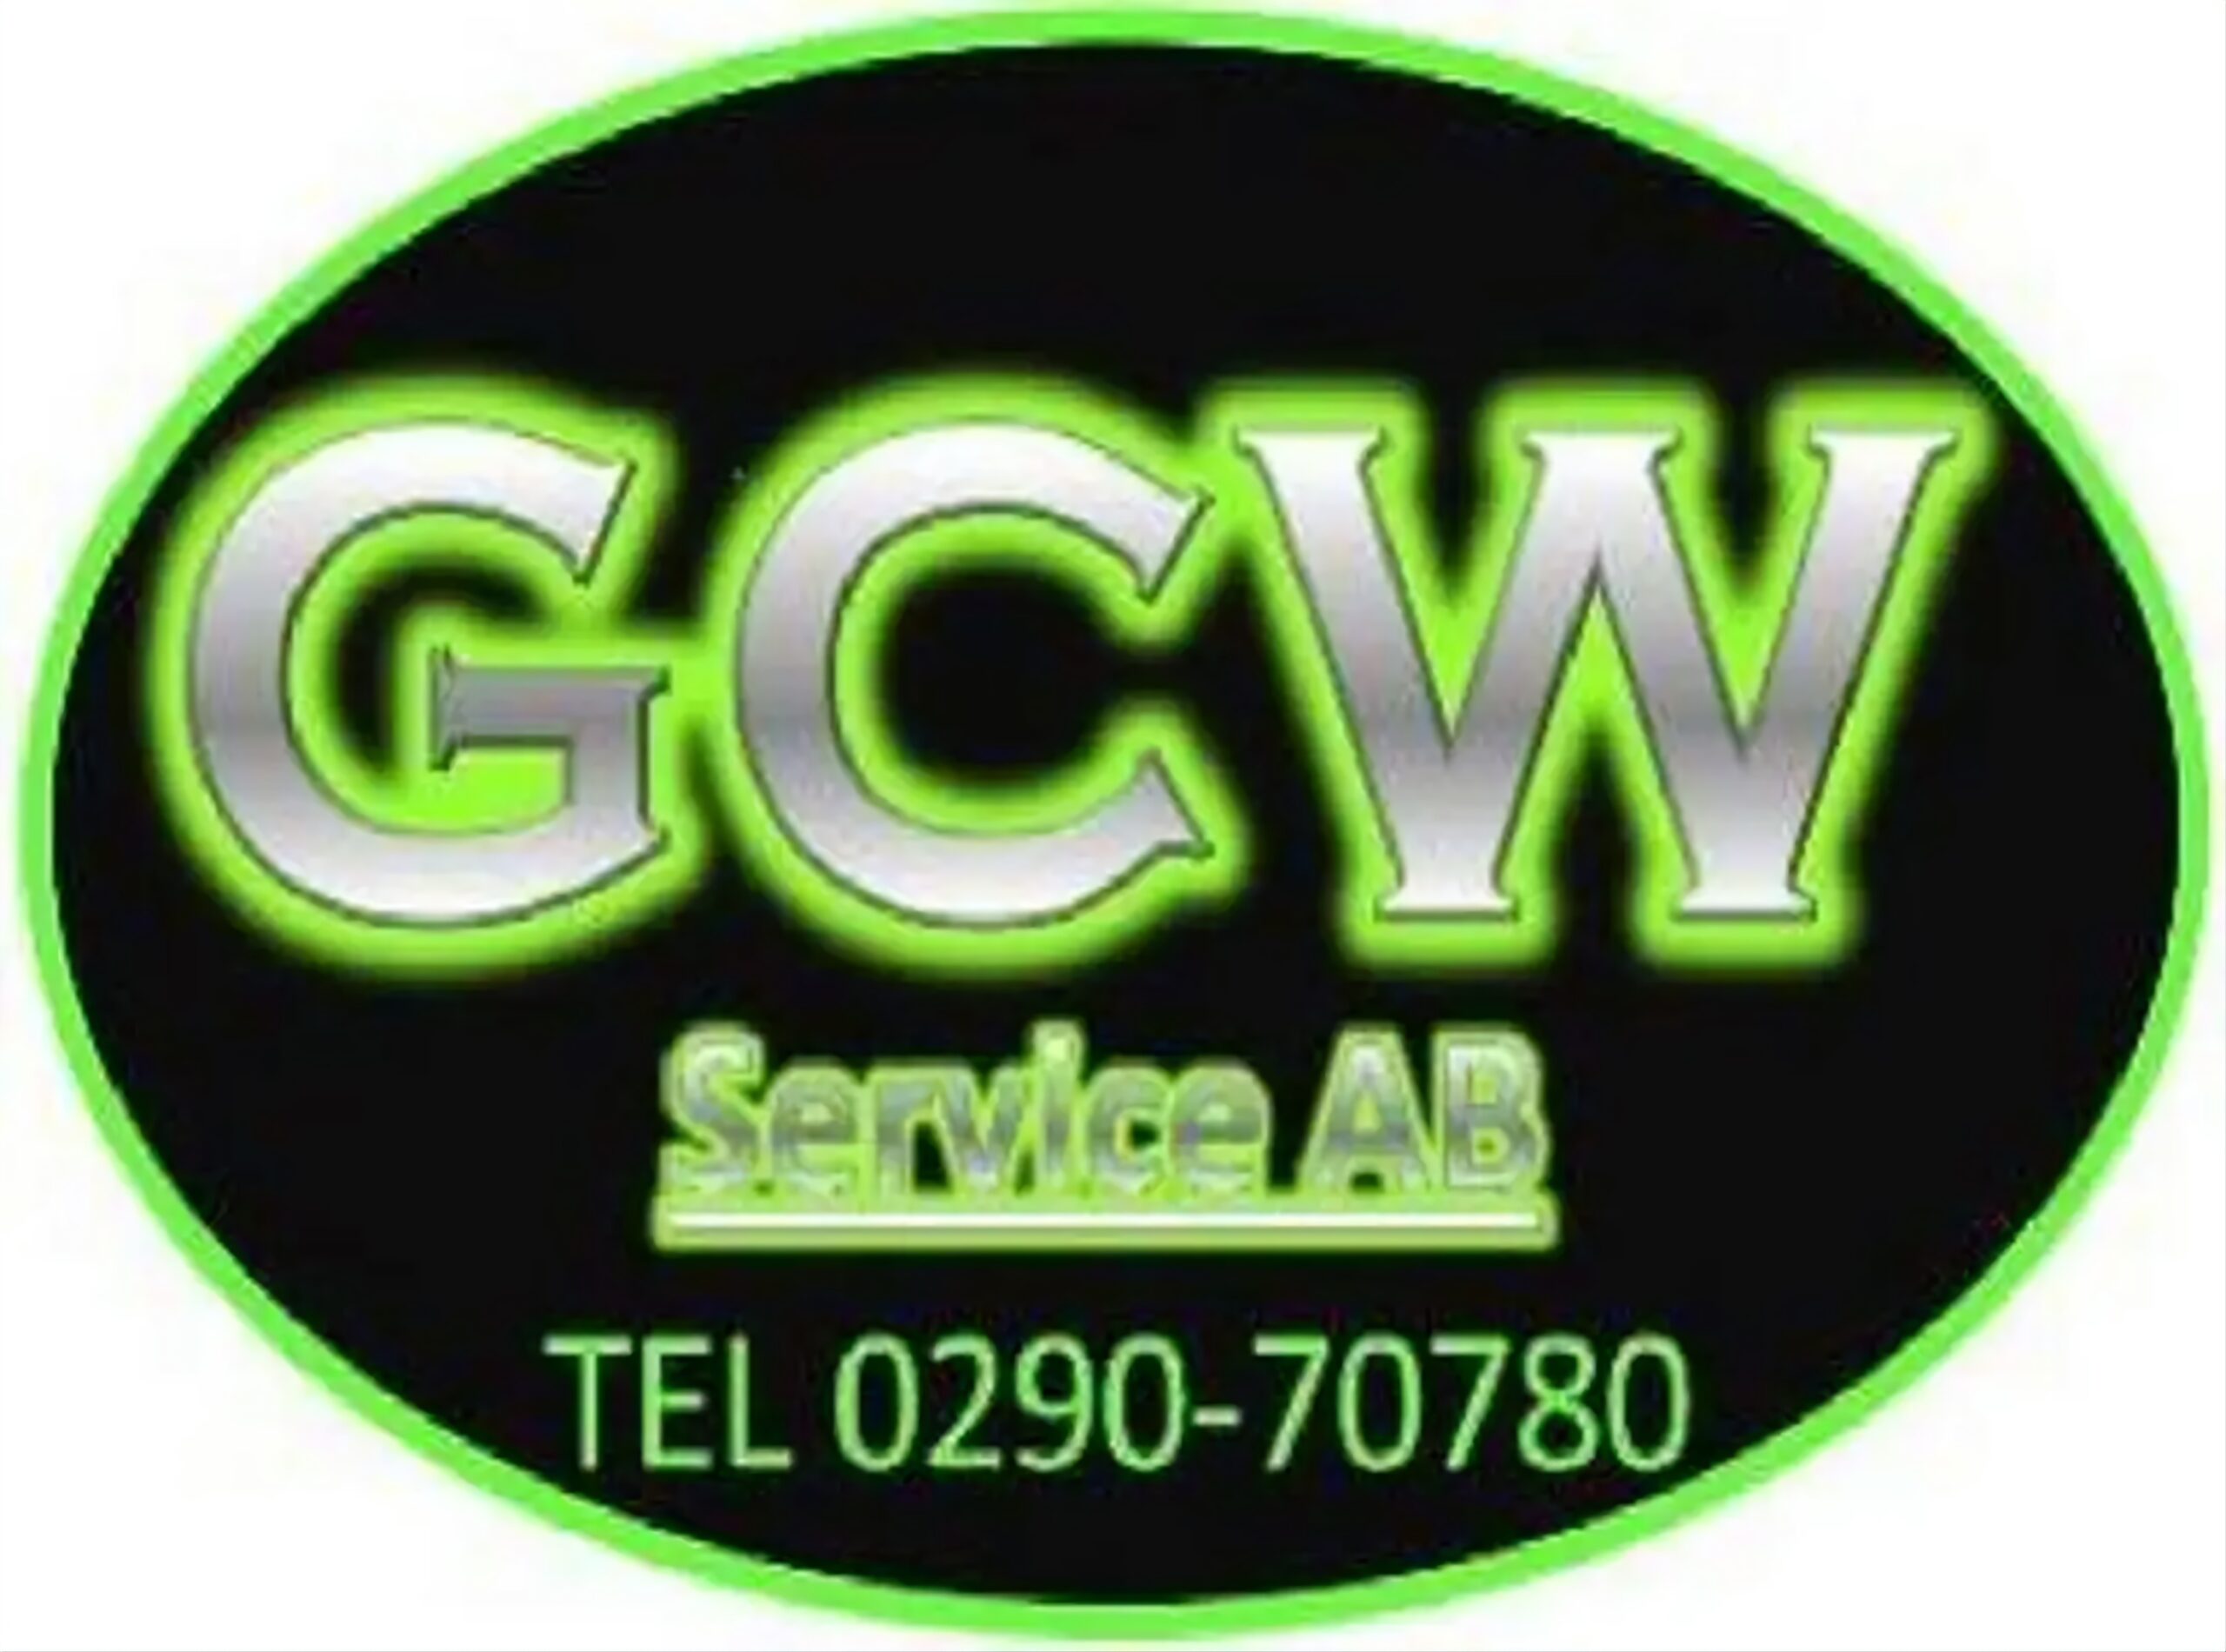 GCW Service AB